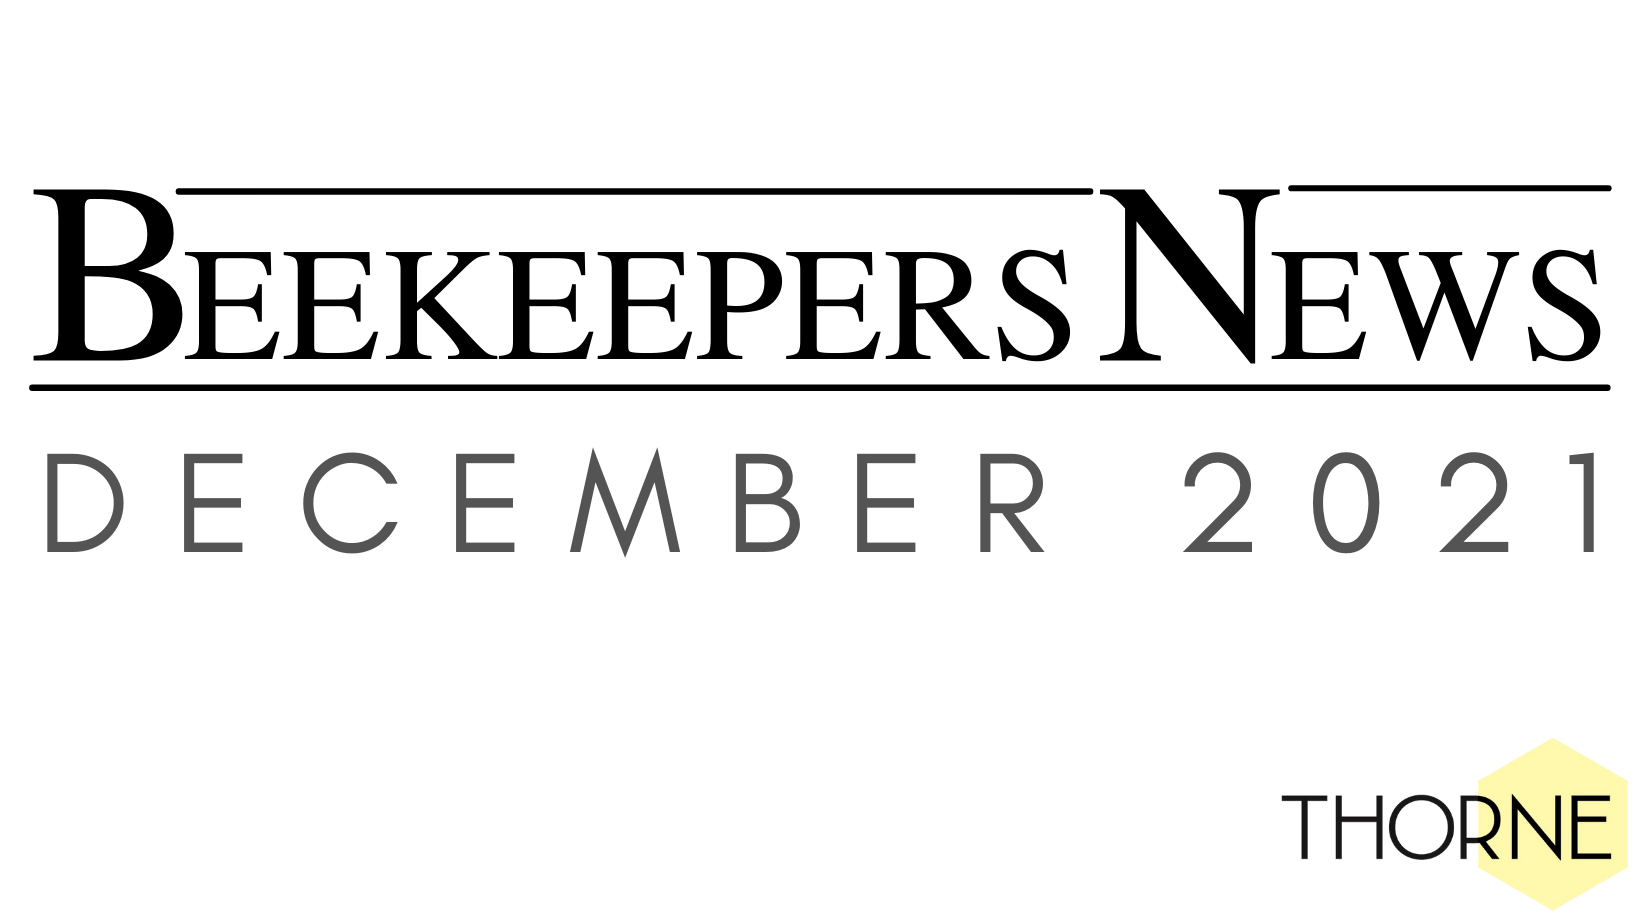 Beekeepers News - December 2021 - Issue 63